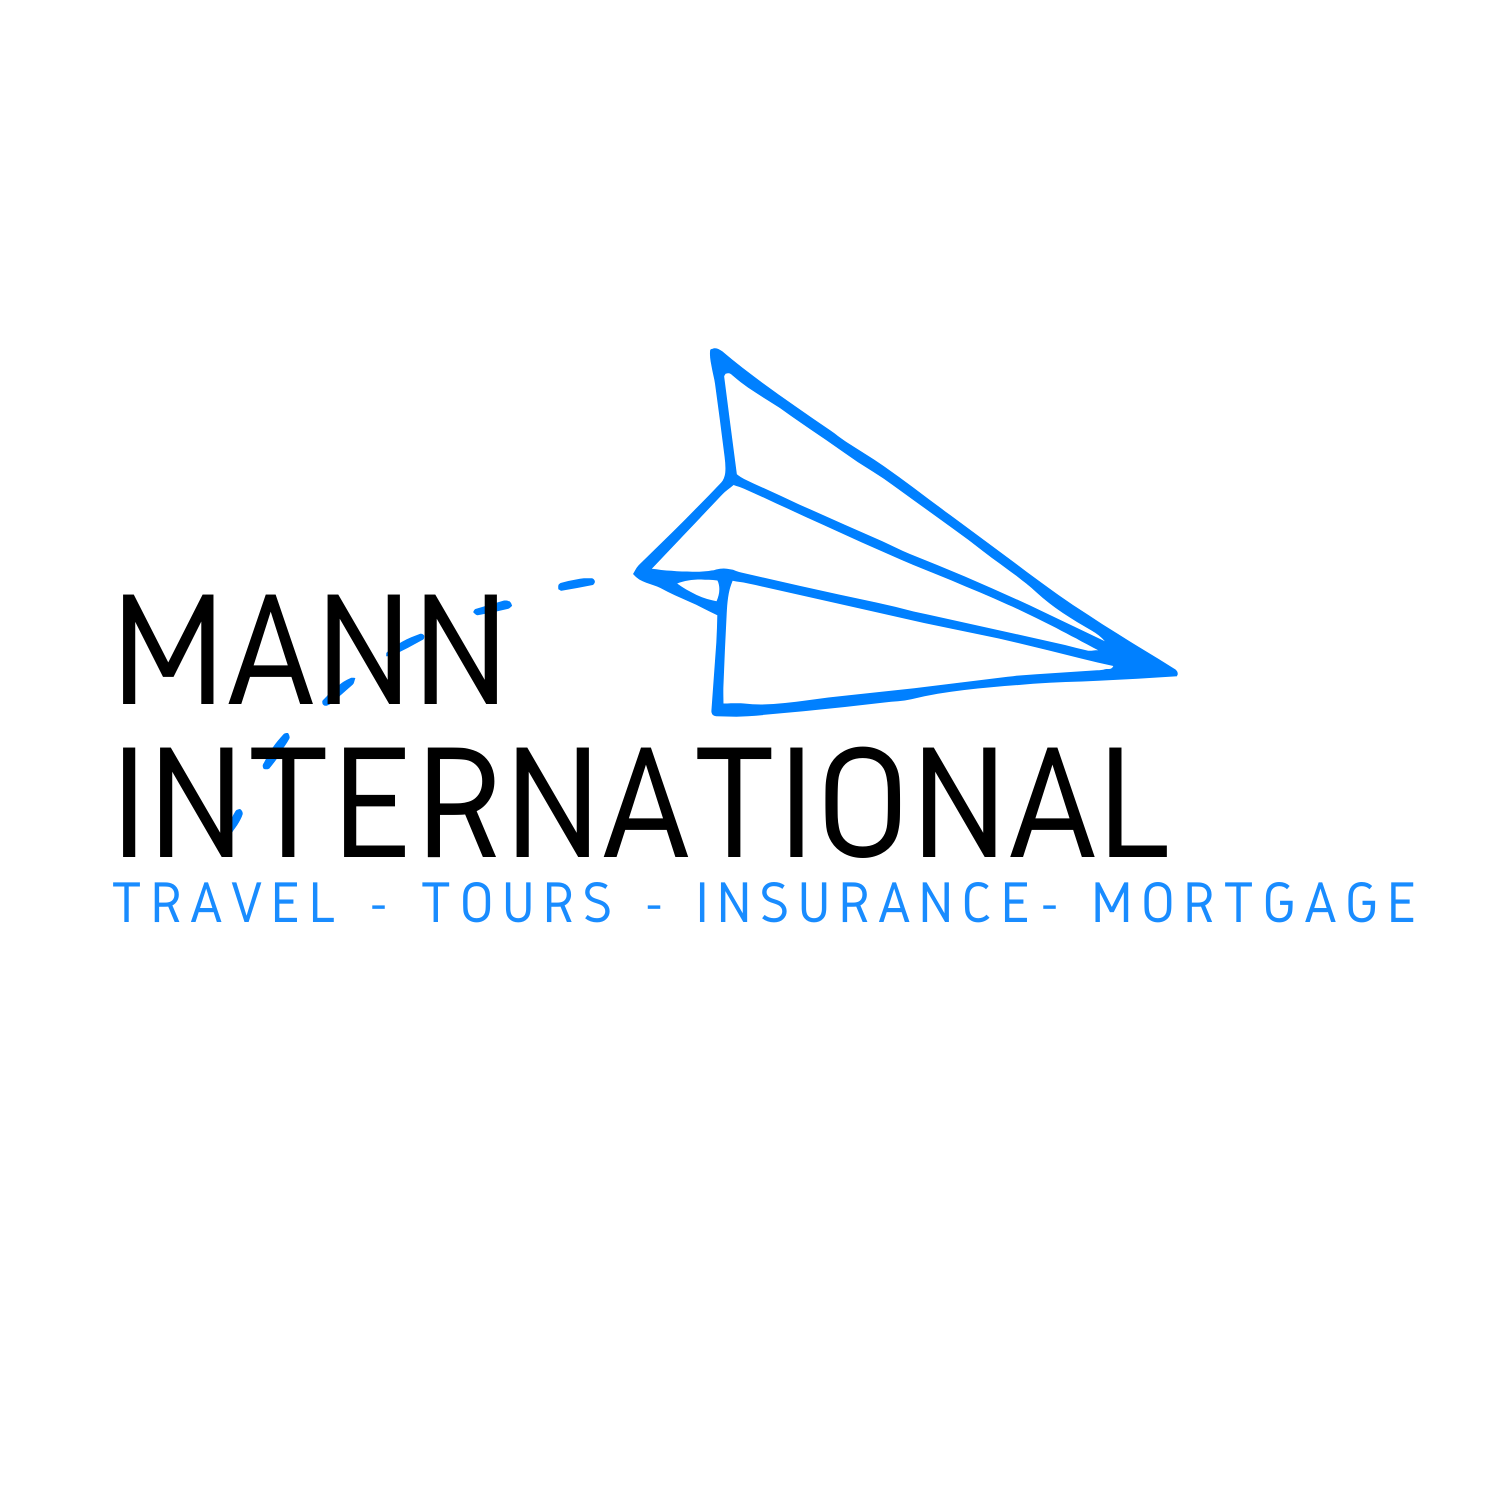 Mann International Travel & Tours & Insurance and Mortgage Group Ltd